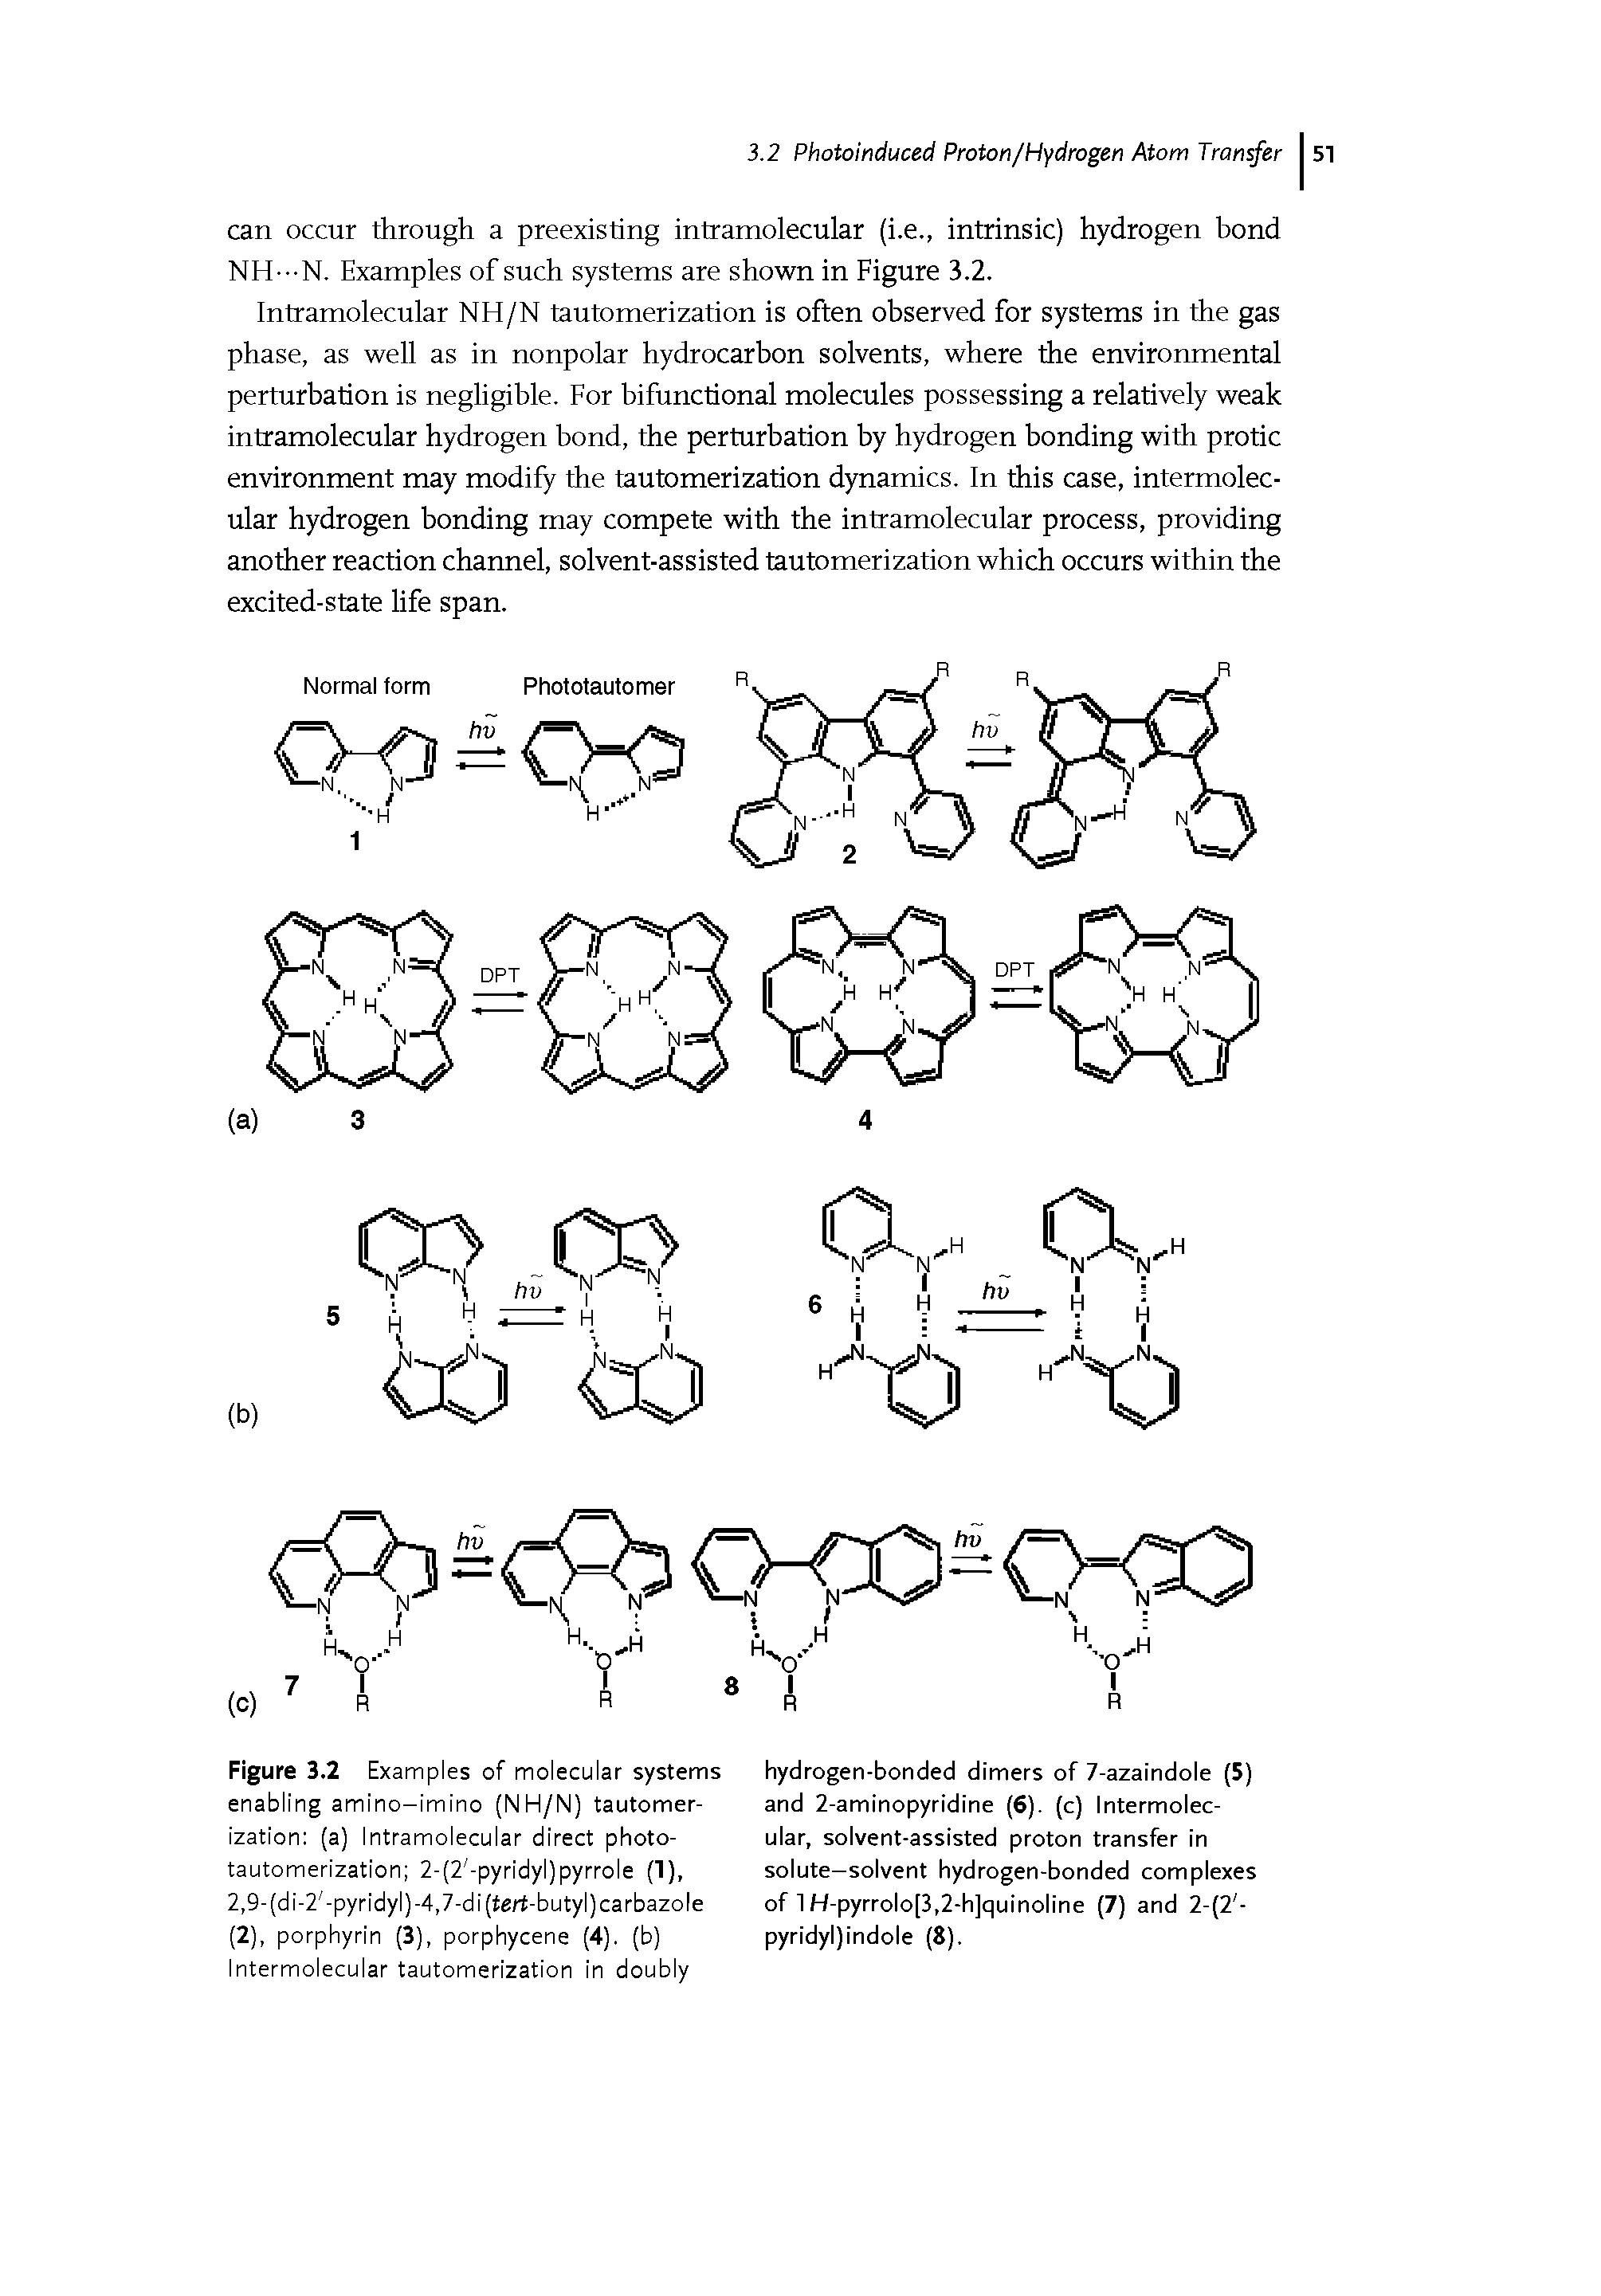 Figure 3.2 Examples of molecular systems enabling amino-imino (NH/N) tautomerization (a) Intramolecular direct photo-tautomerization 2-(2 -pyridyl)pyrrole (1), 2,9-(di-2 -pyridyl)-4,7-di(4ert-butyl)carbazole (2), porphyrin (3), porphycene (4). (b) Intermolecular tautomerization in doubly...